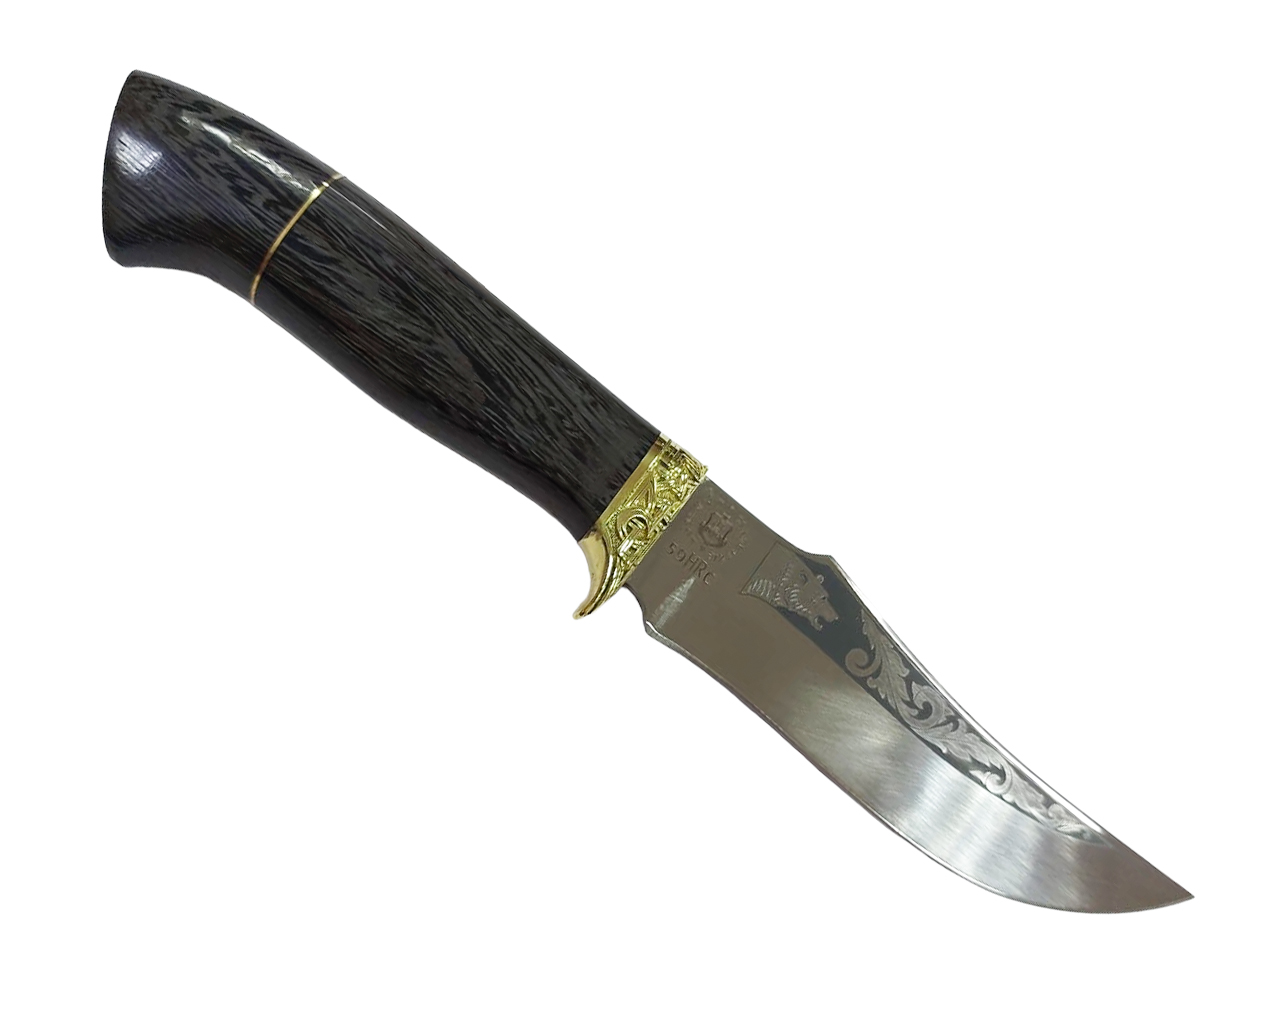 Нож Ладья Клык-2 НТ-27 Р 95х18 рис.венге